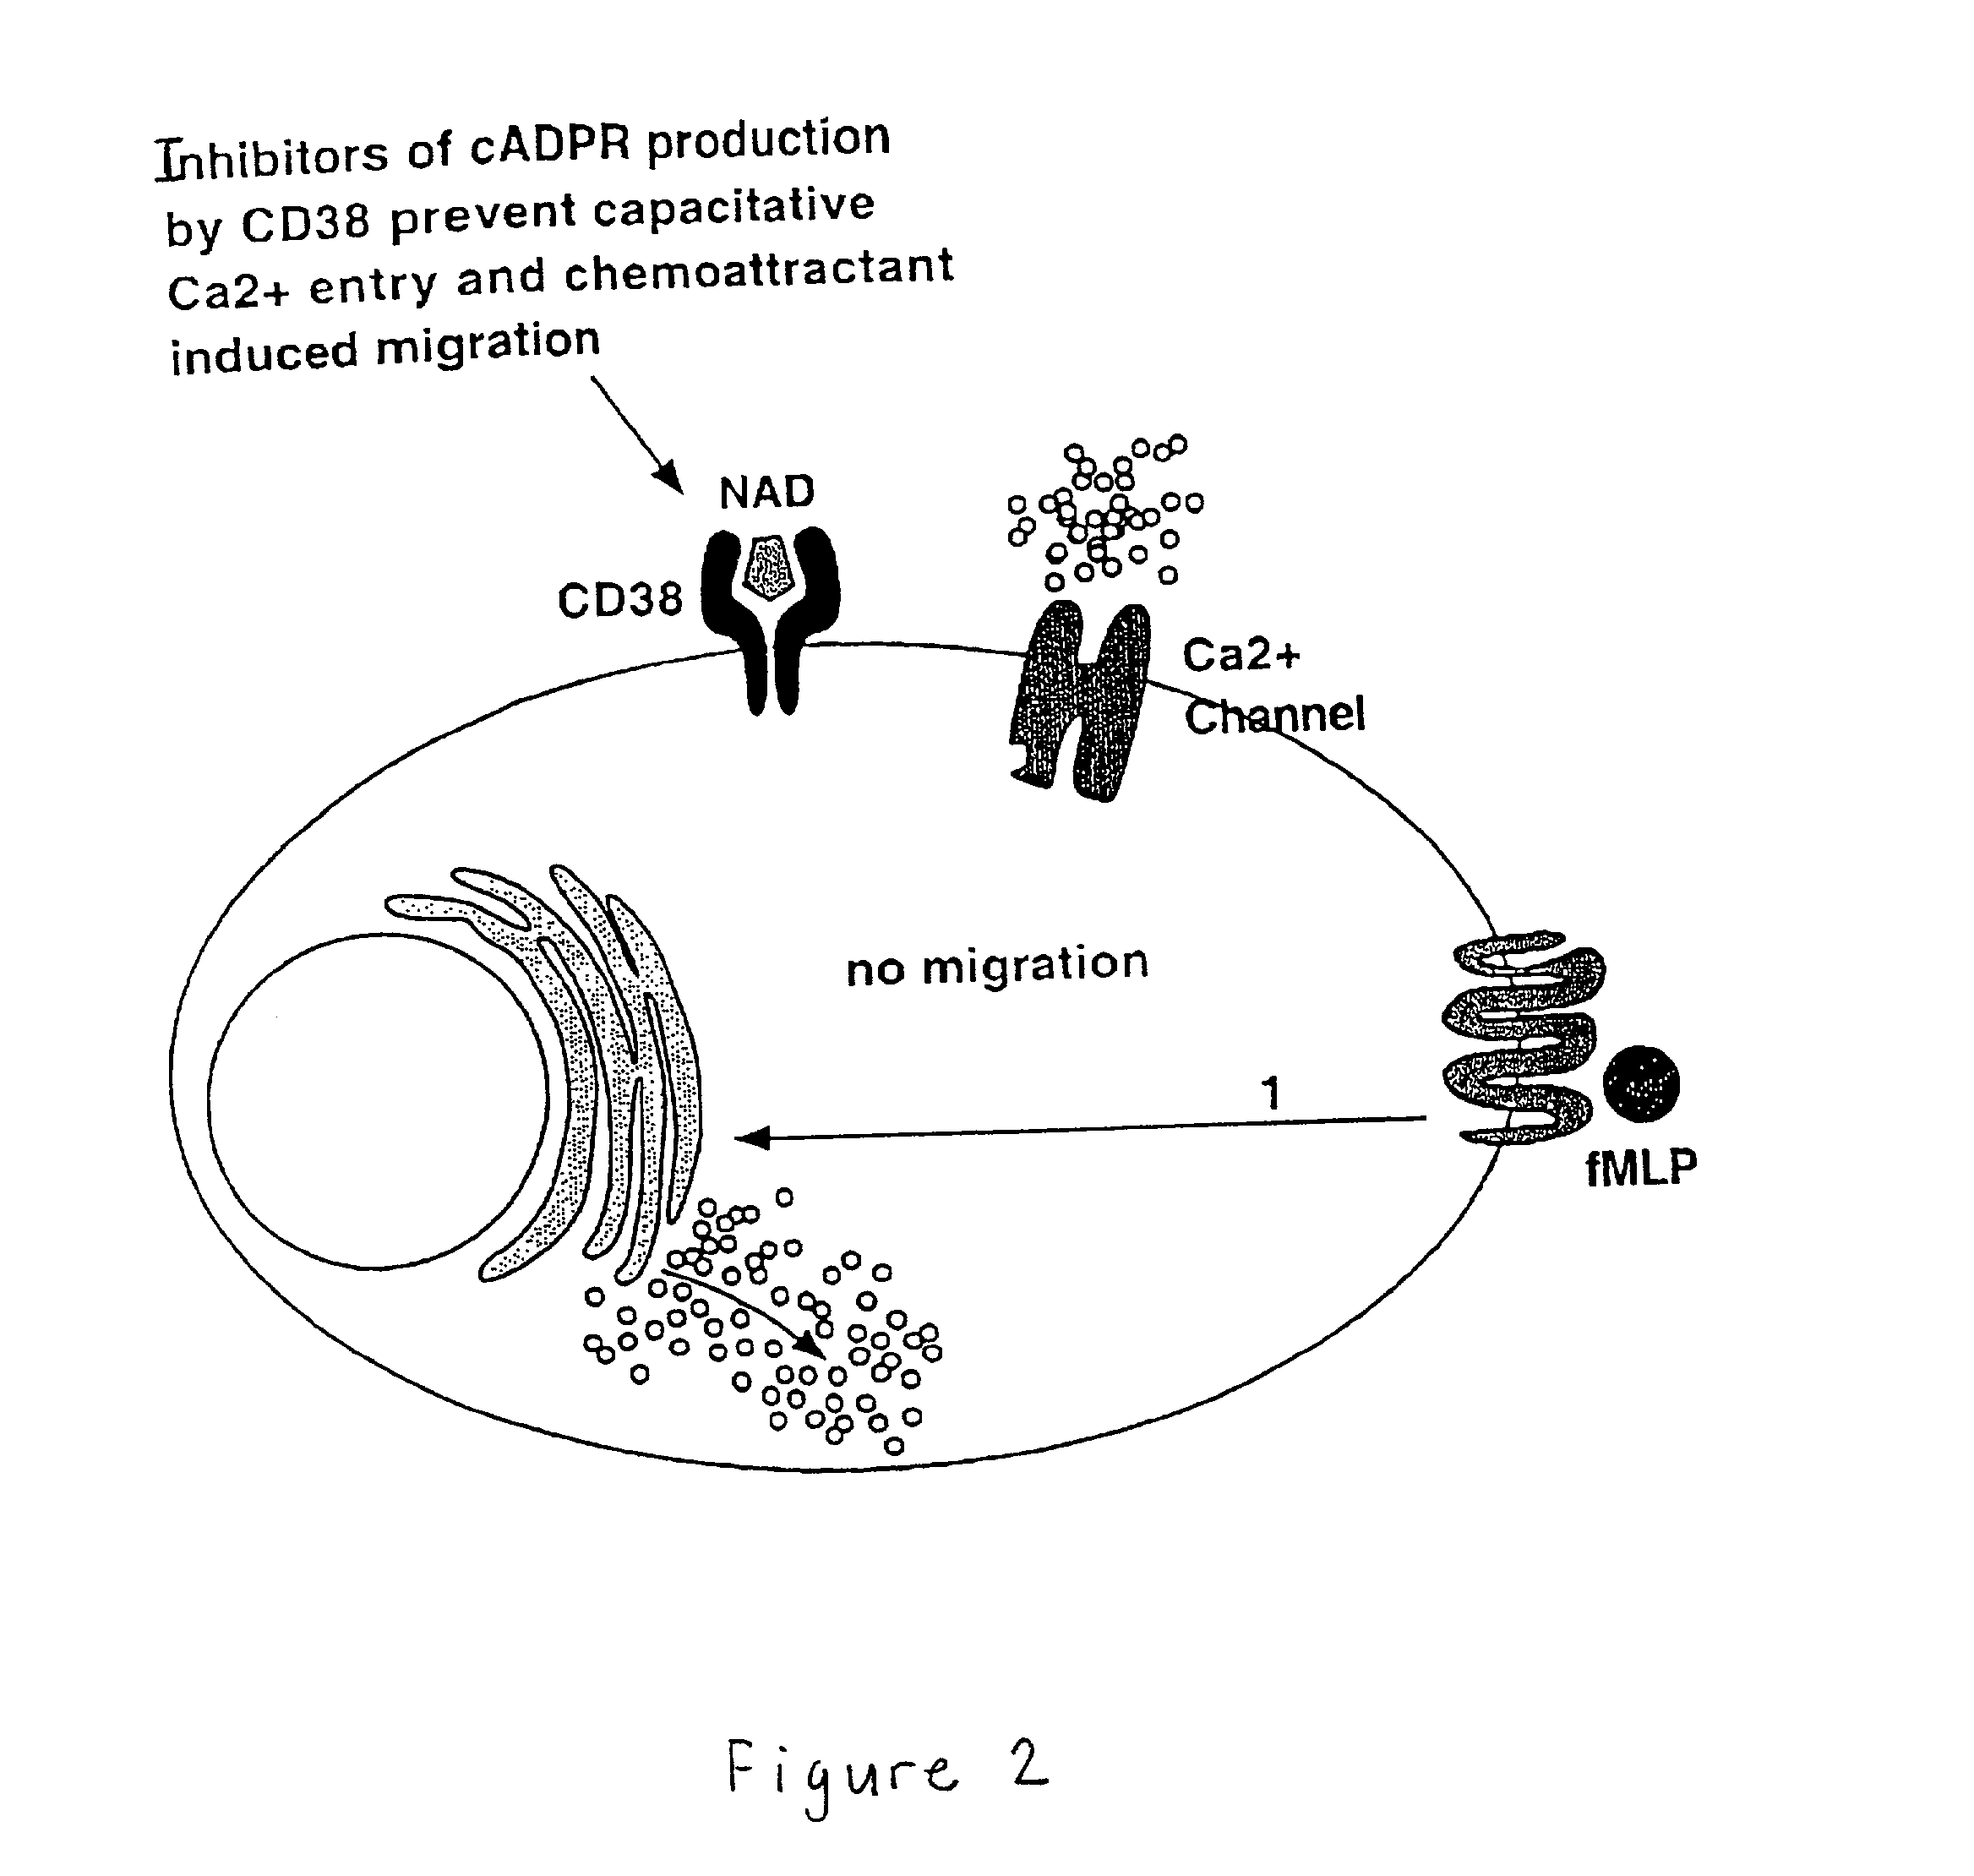 CD38 modulated chemotaxis